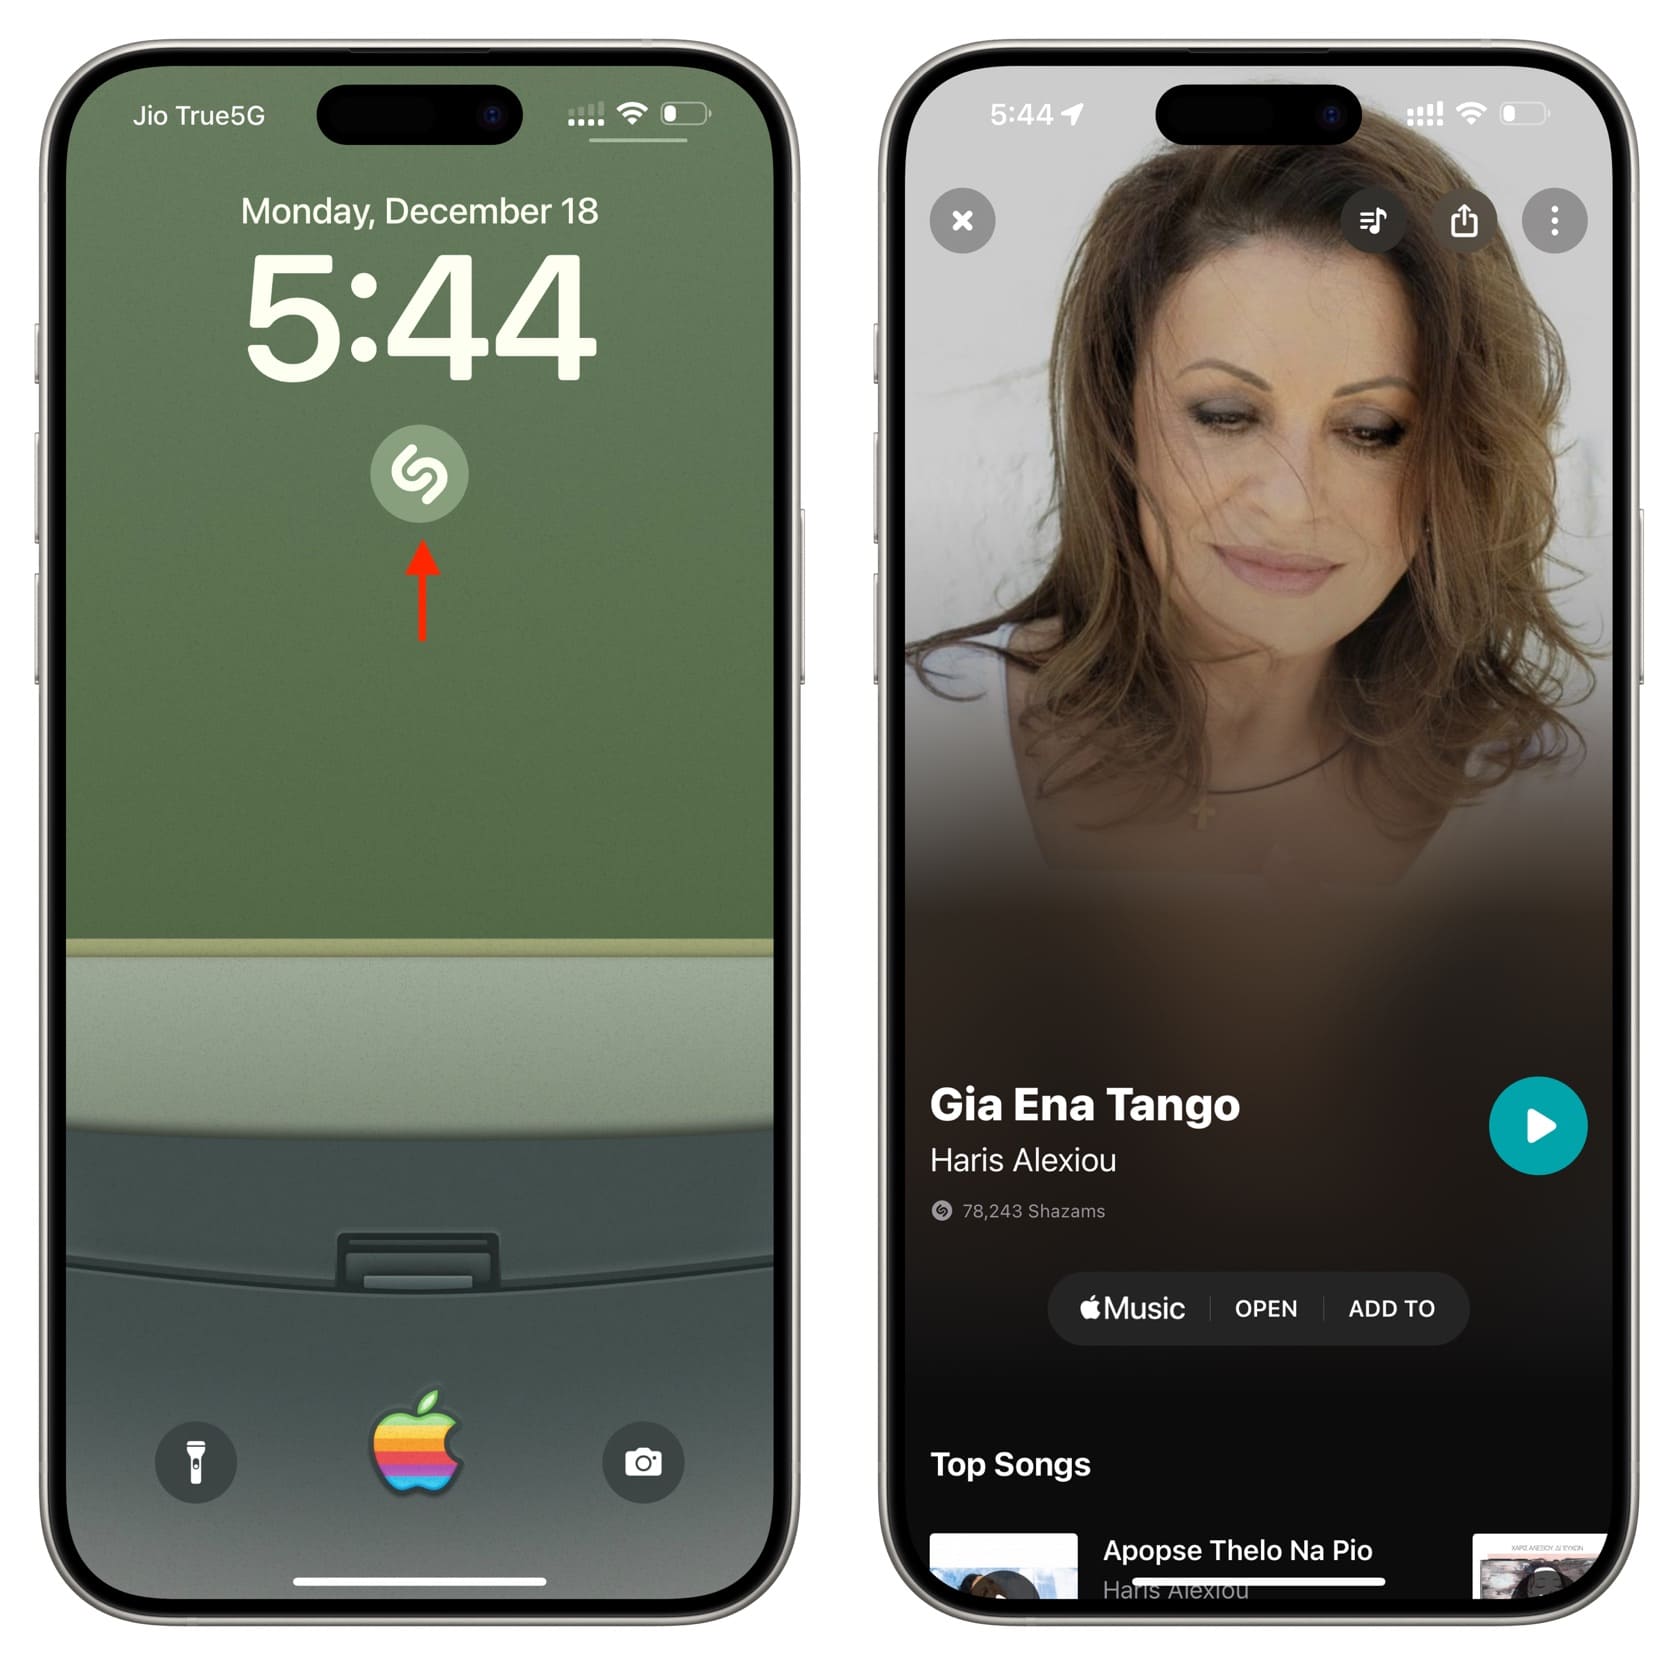 Shazam shortcut on iPhone Lock Screen to identify songs